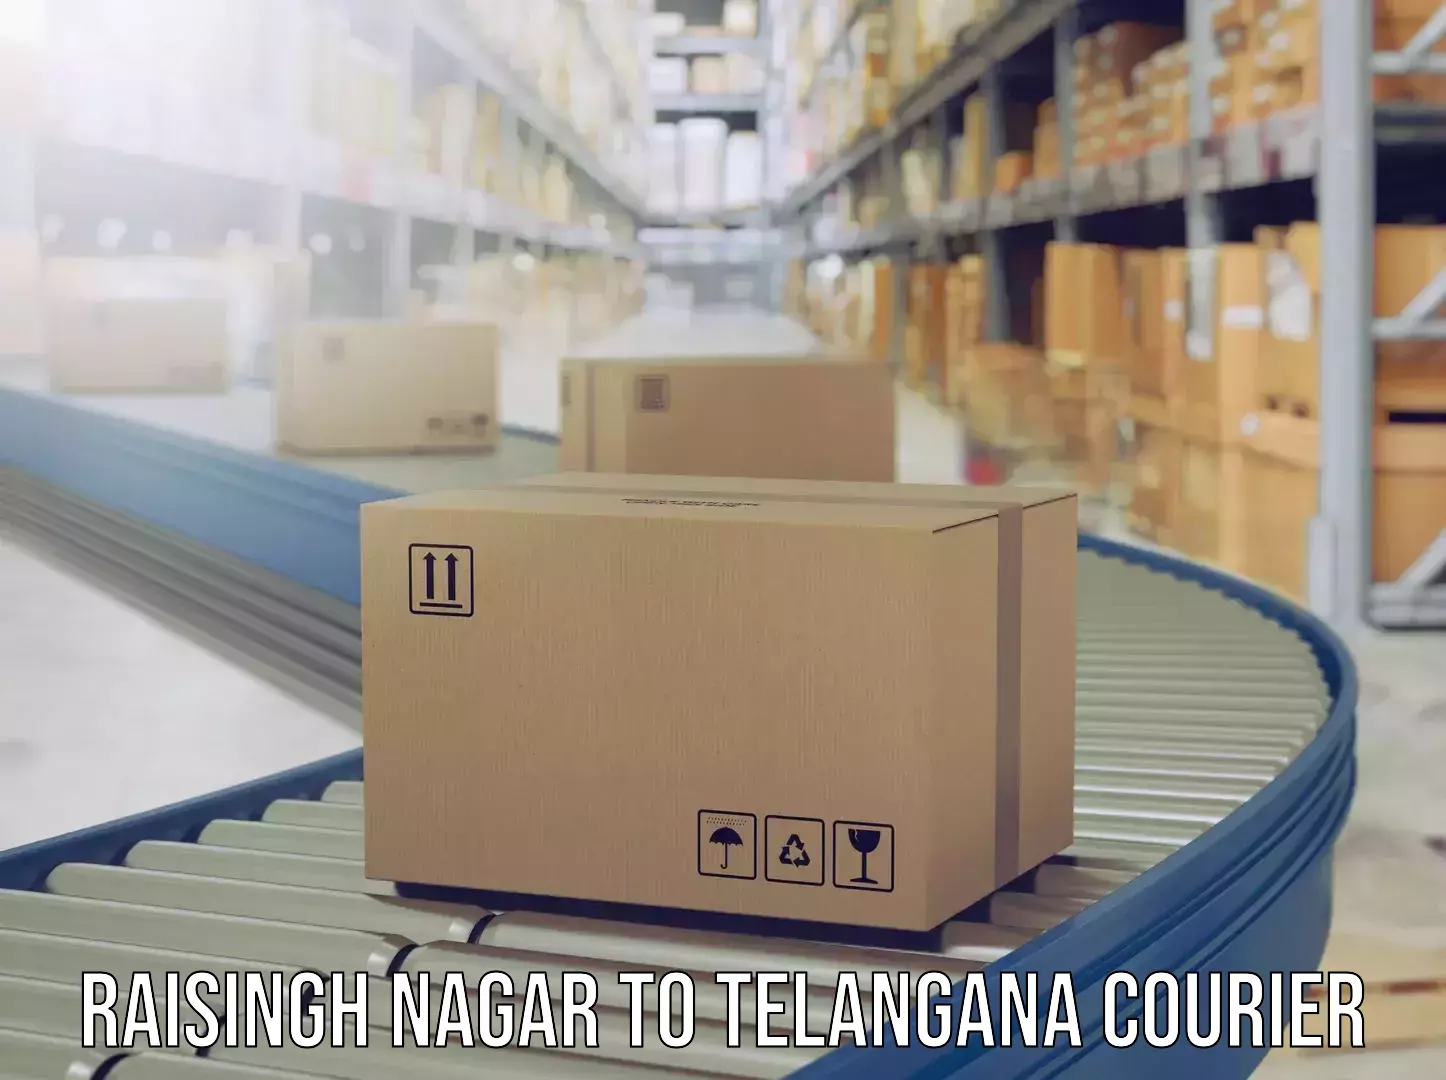 Luggage delivery app Raisingh Nagar to Sathupally